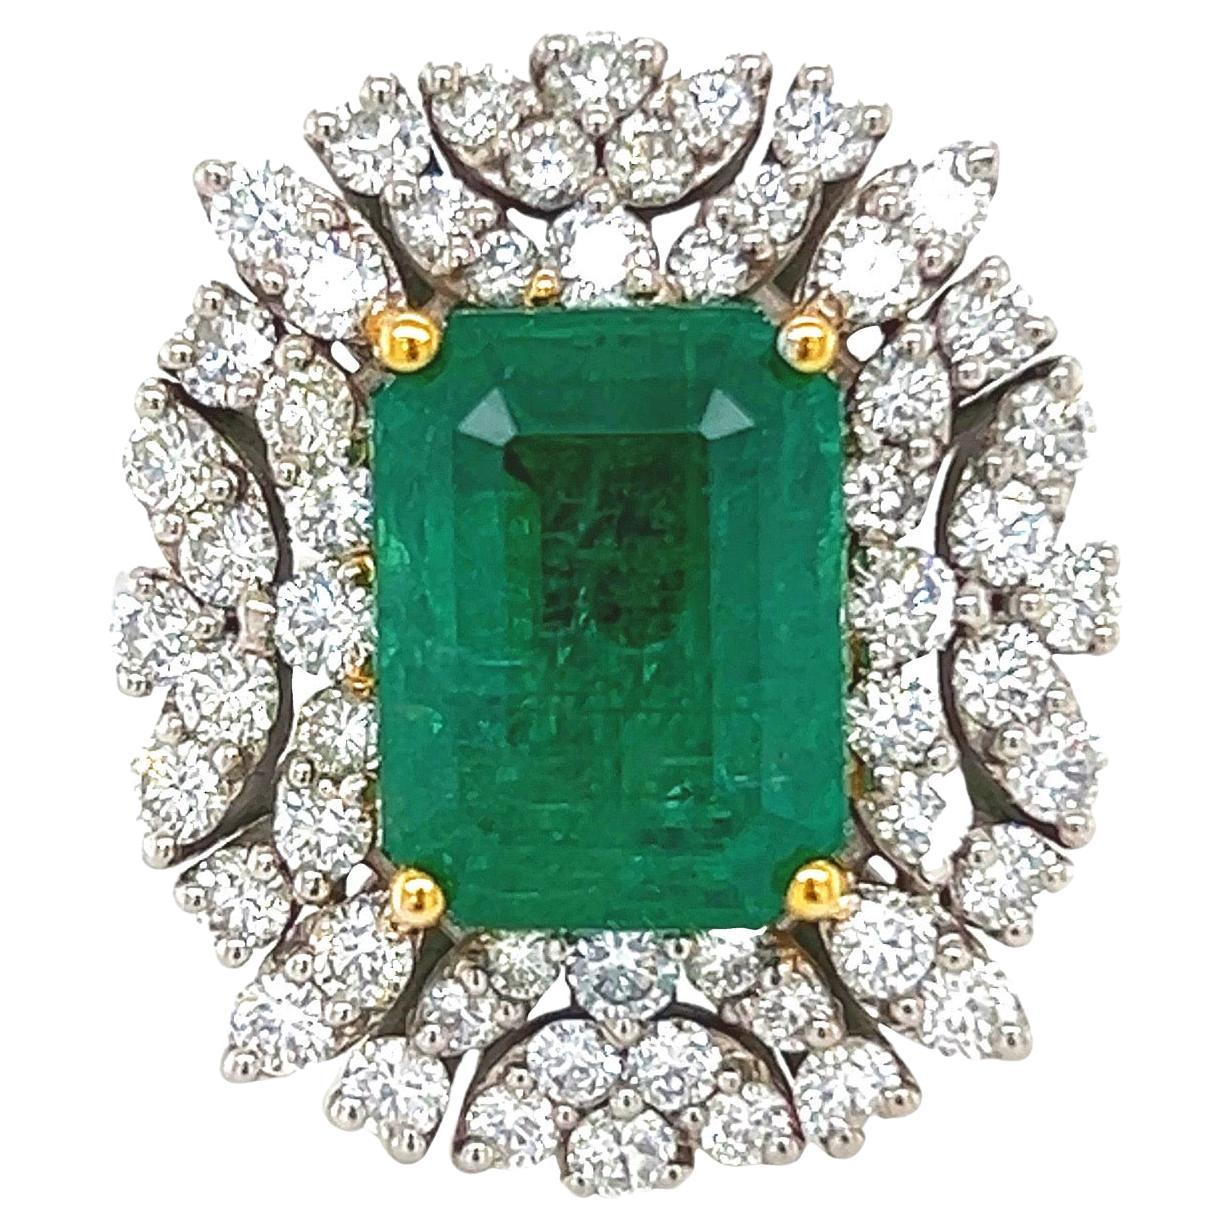 5.66 Carat Zambian Emerald Ring